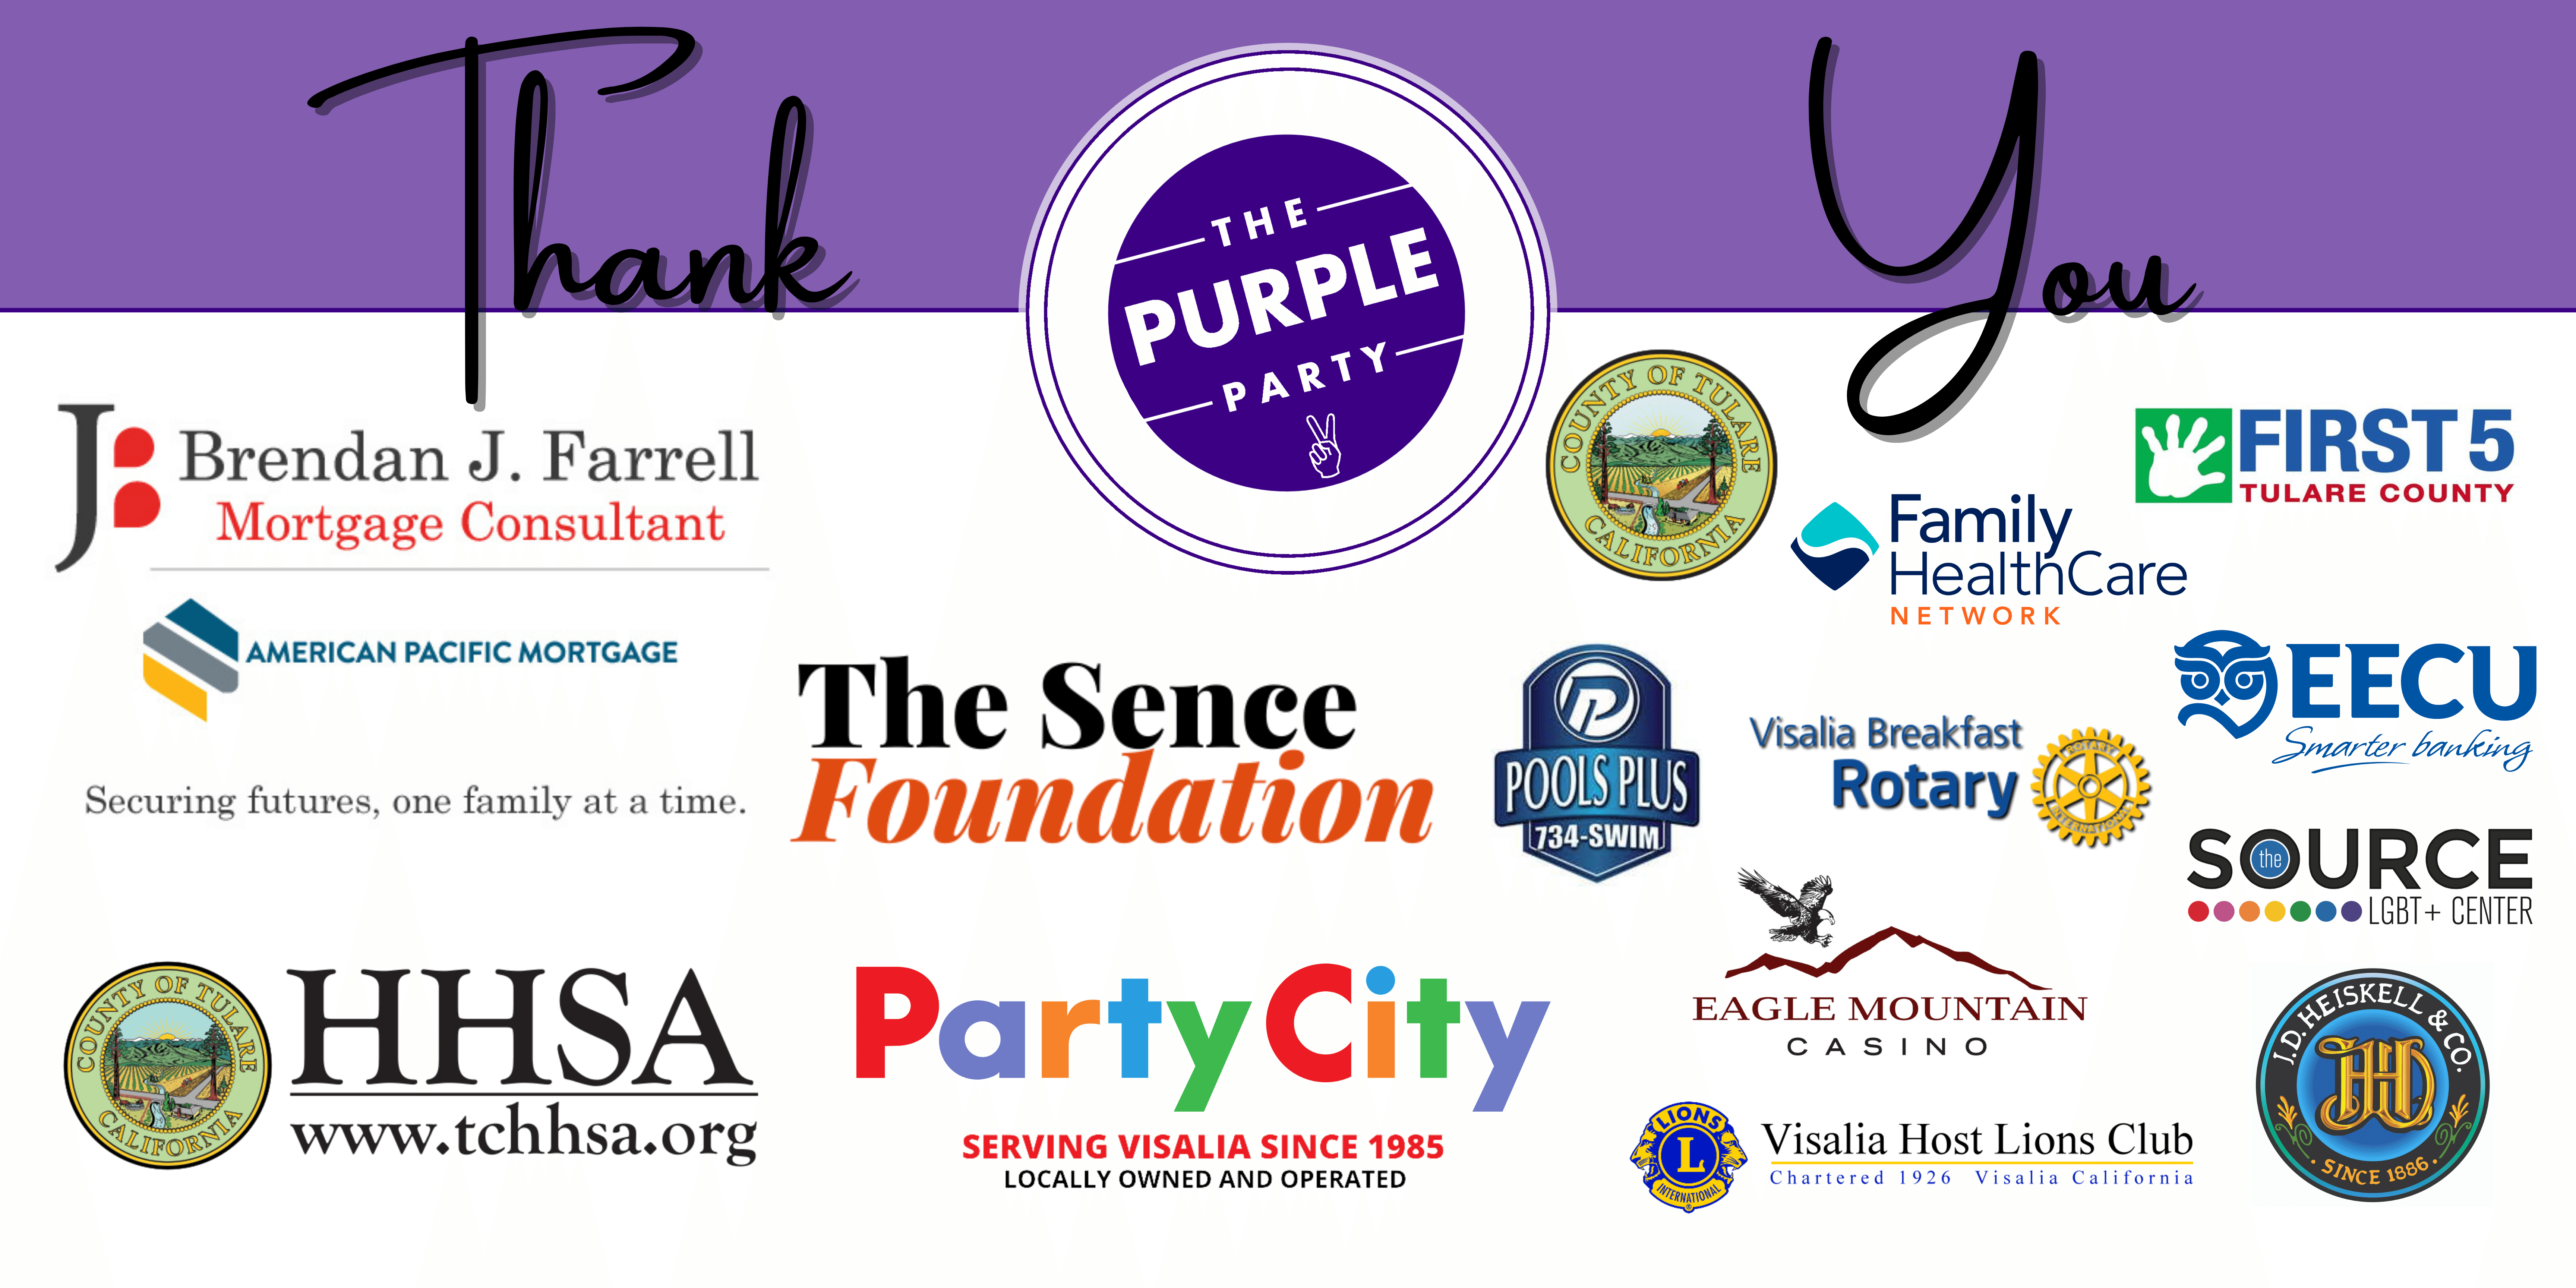 The Purple Party: a celebration of safety